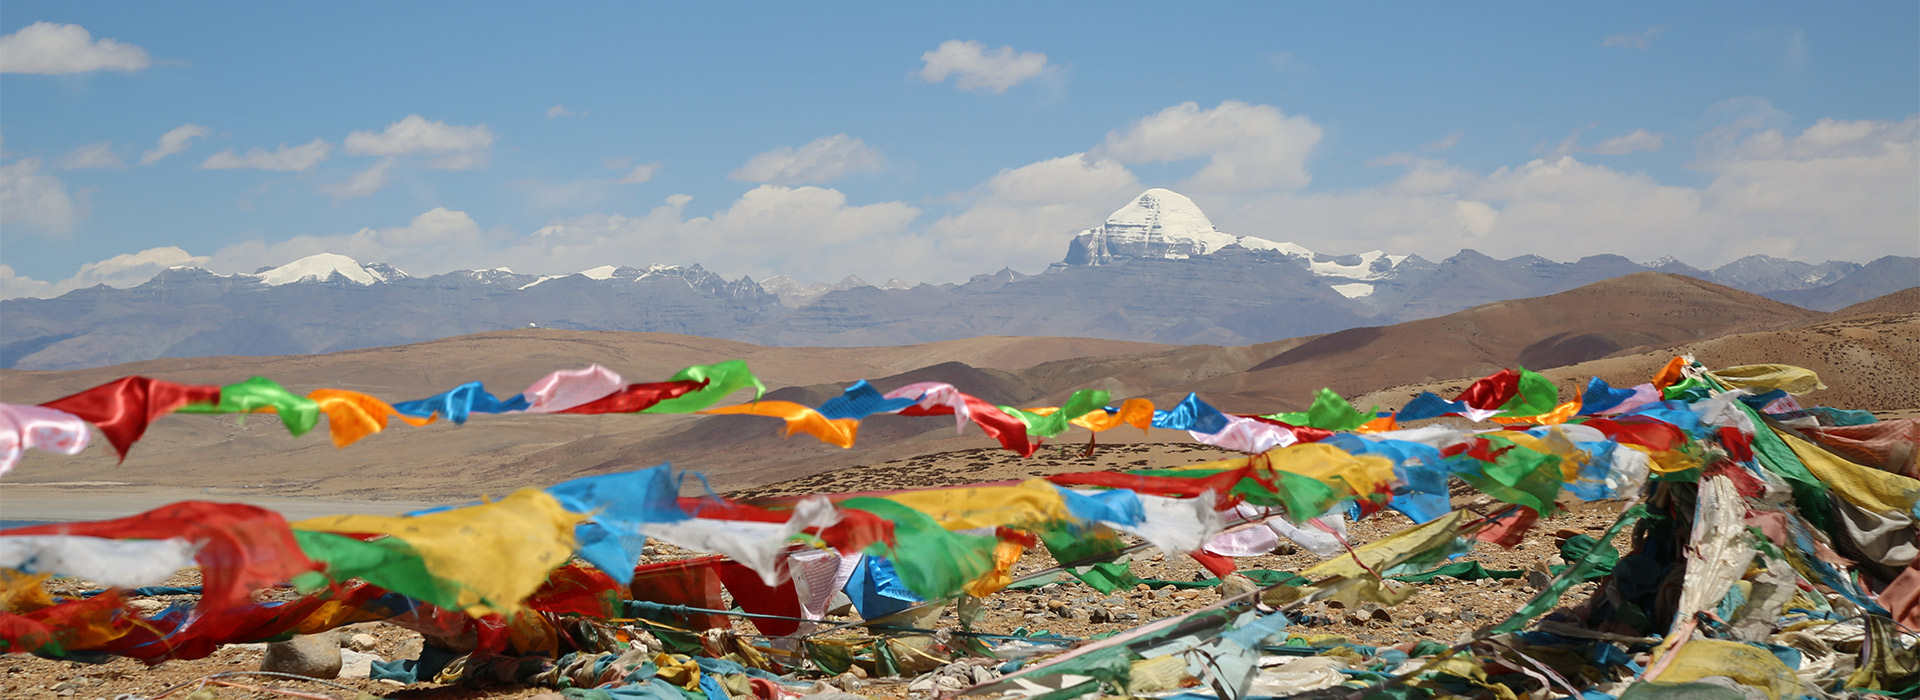 Inspiring Journey to Holy Mt. Kailash